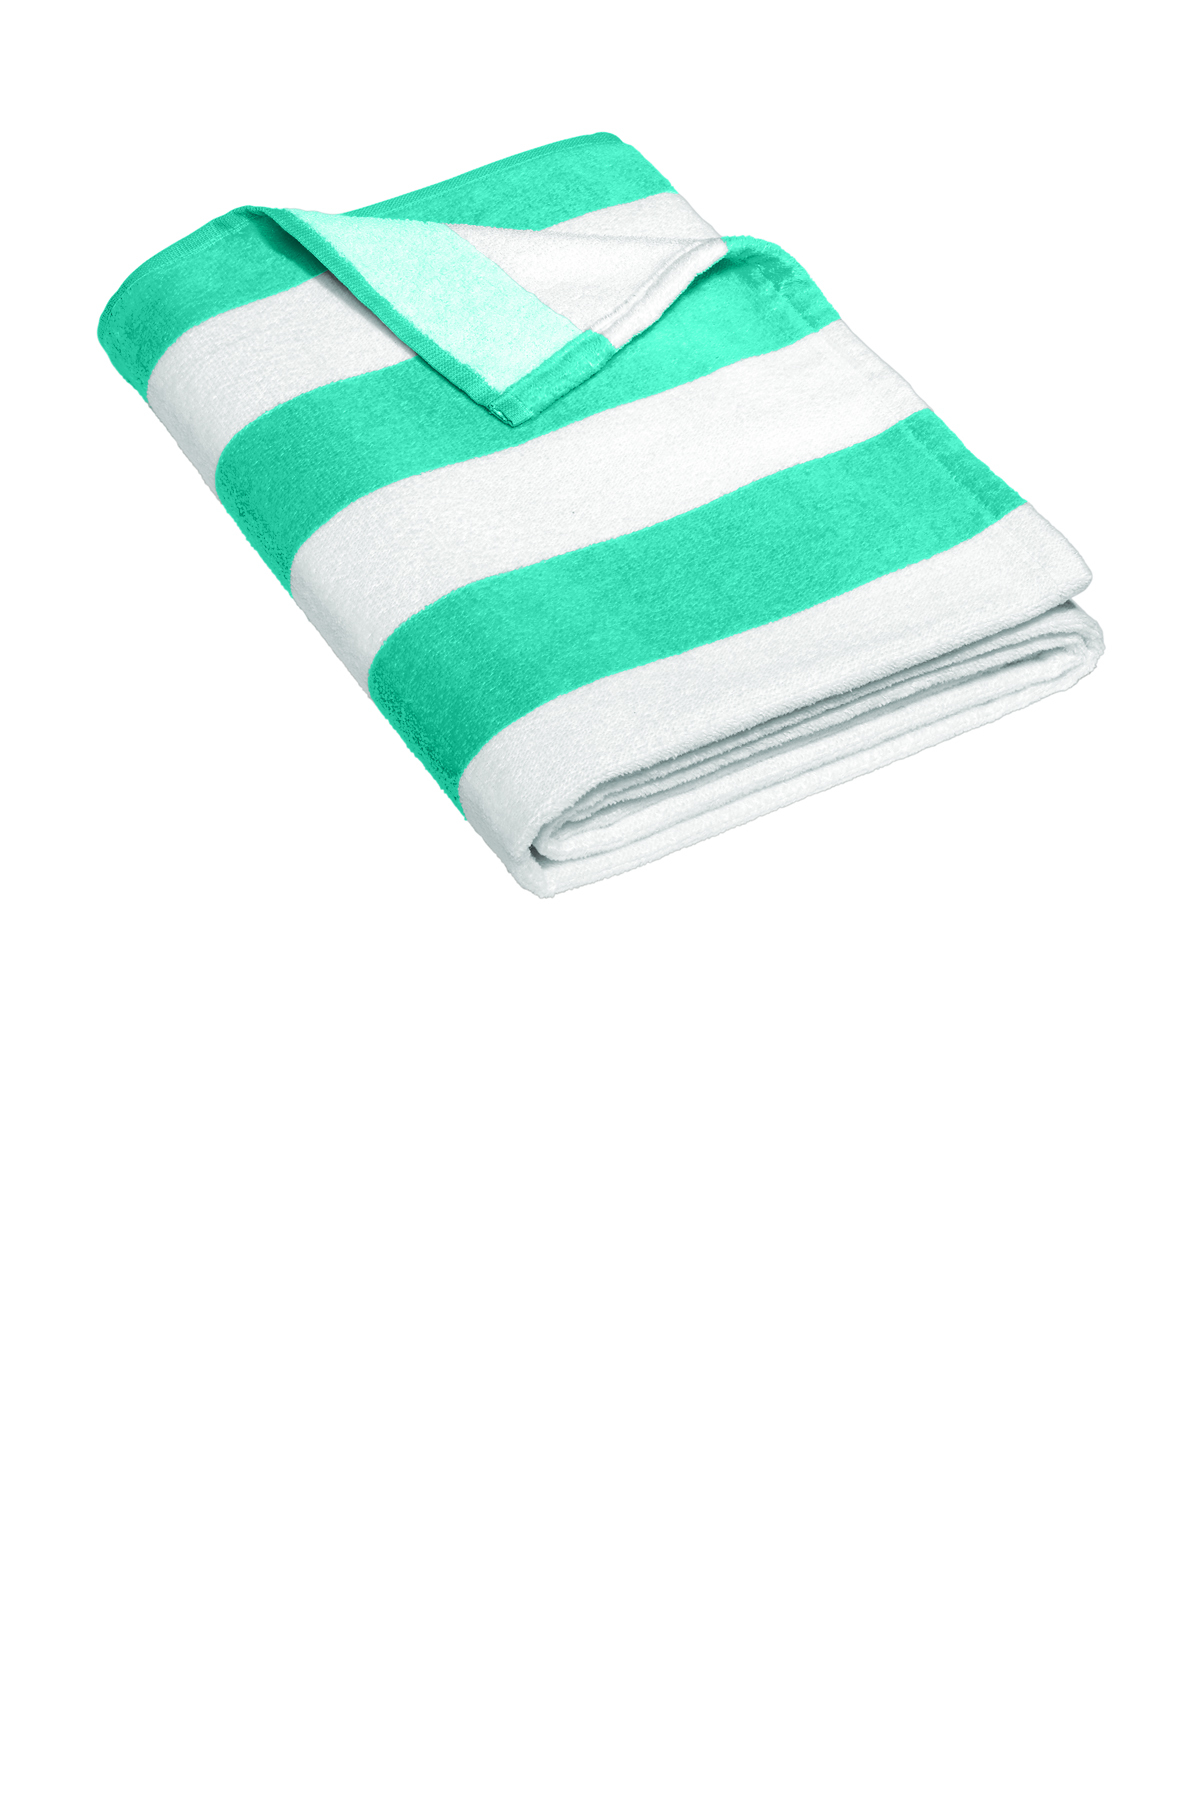 Member's Mark Cabana Oversized Towel - Coral Teal Stripes